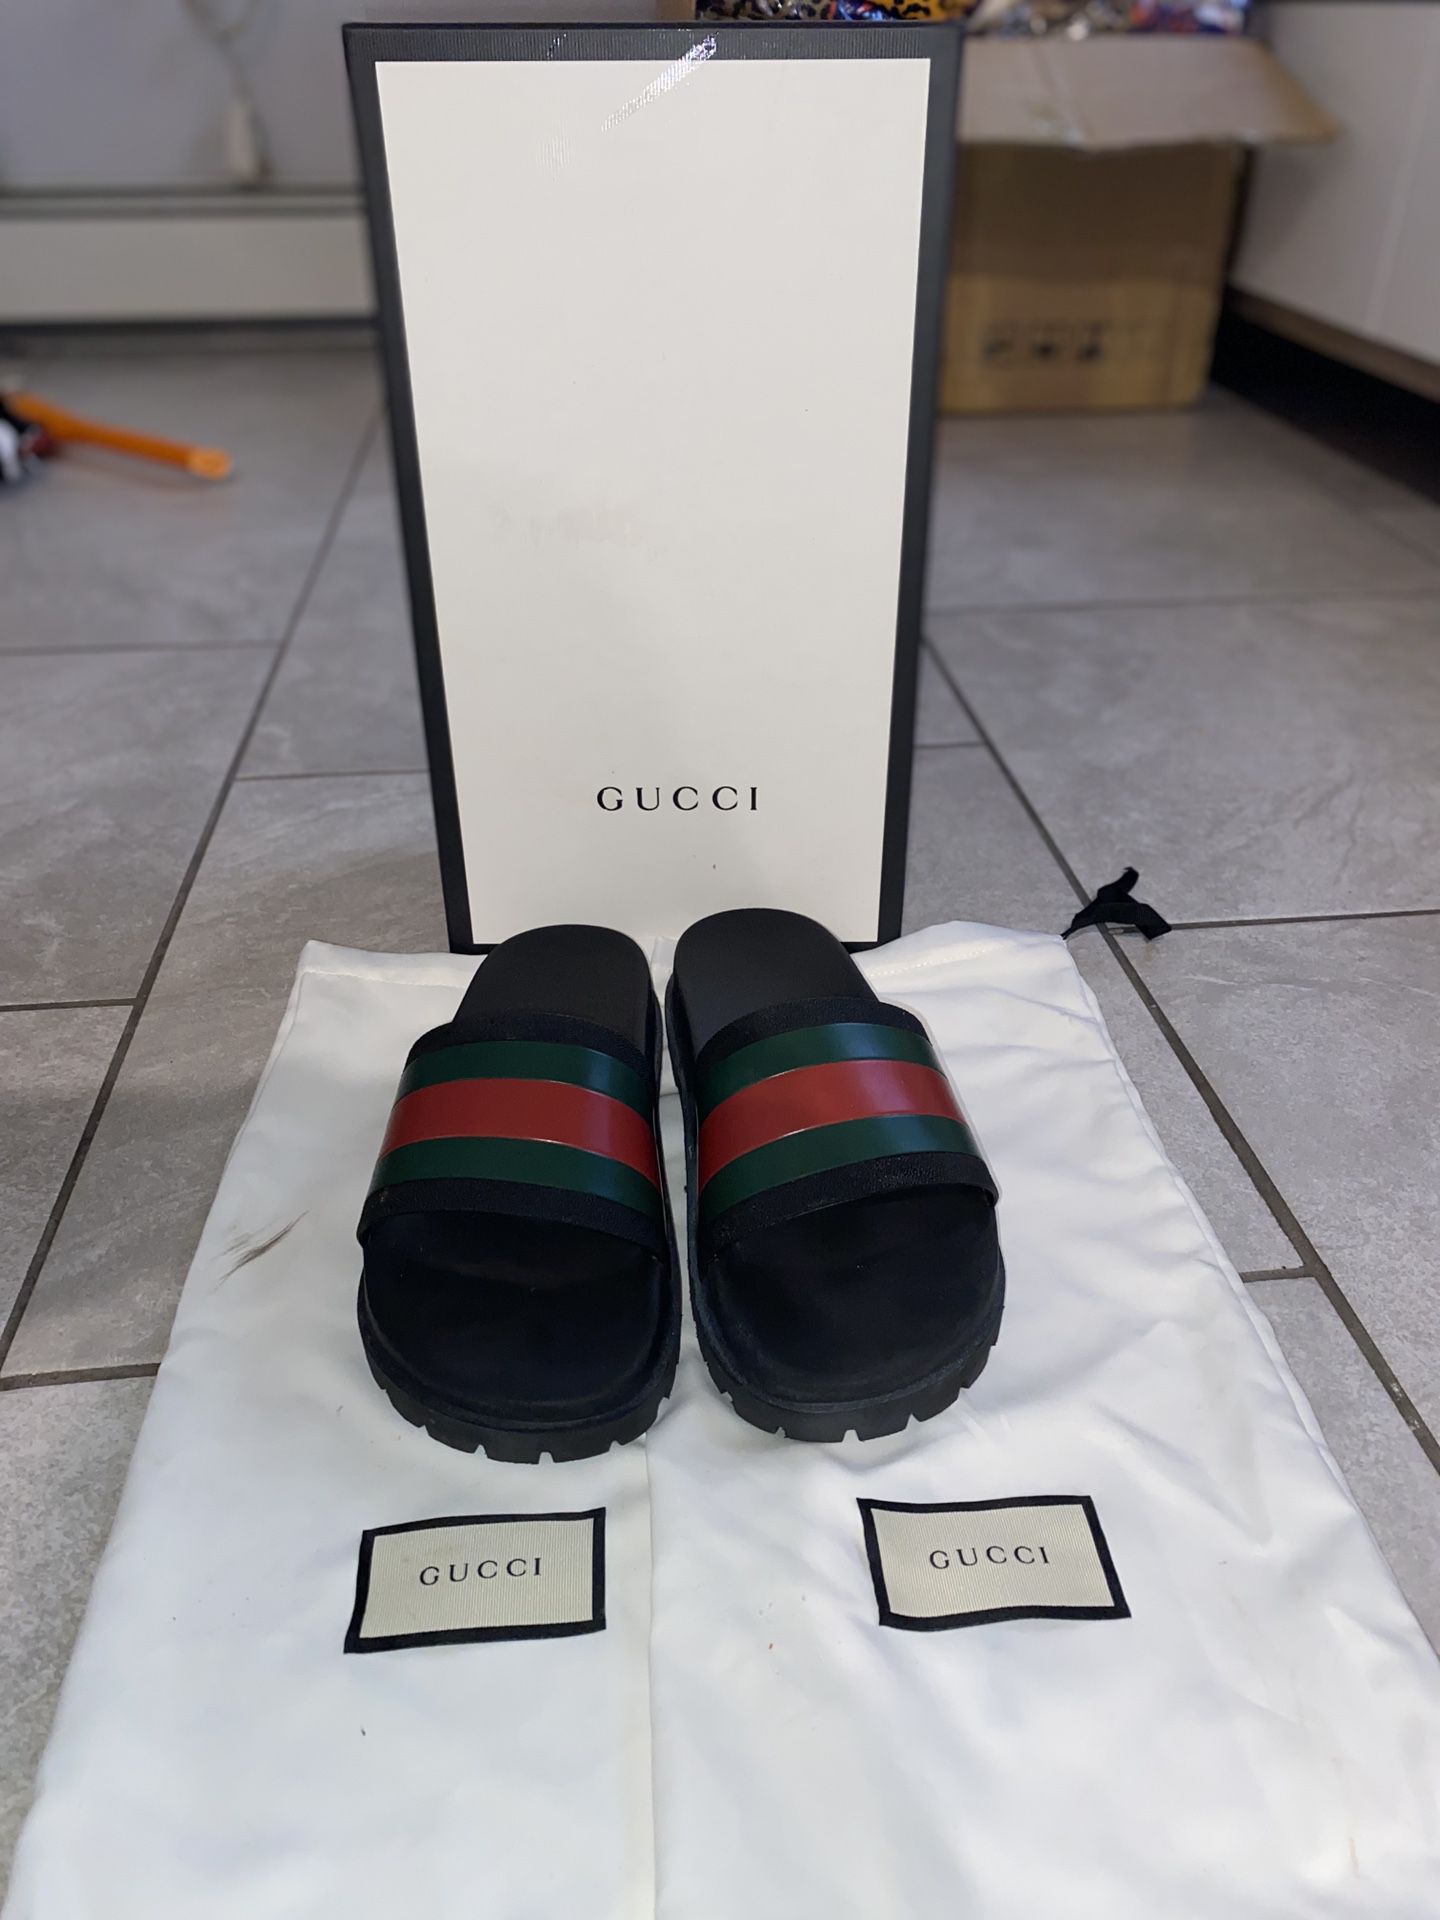 Gucci Slides Size 6.5